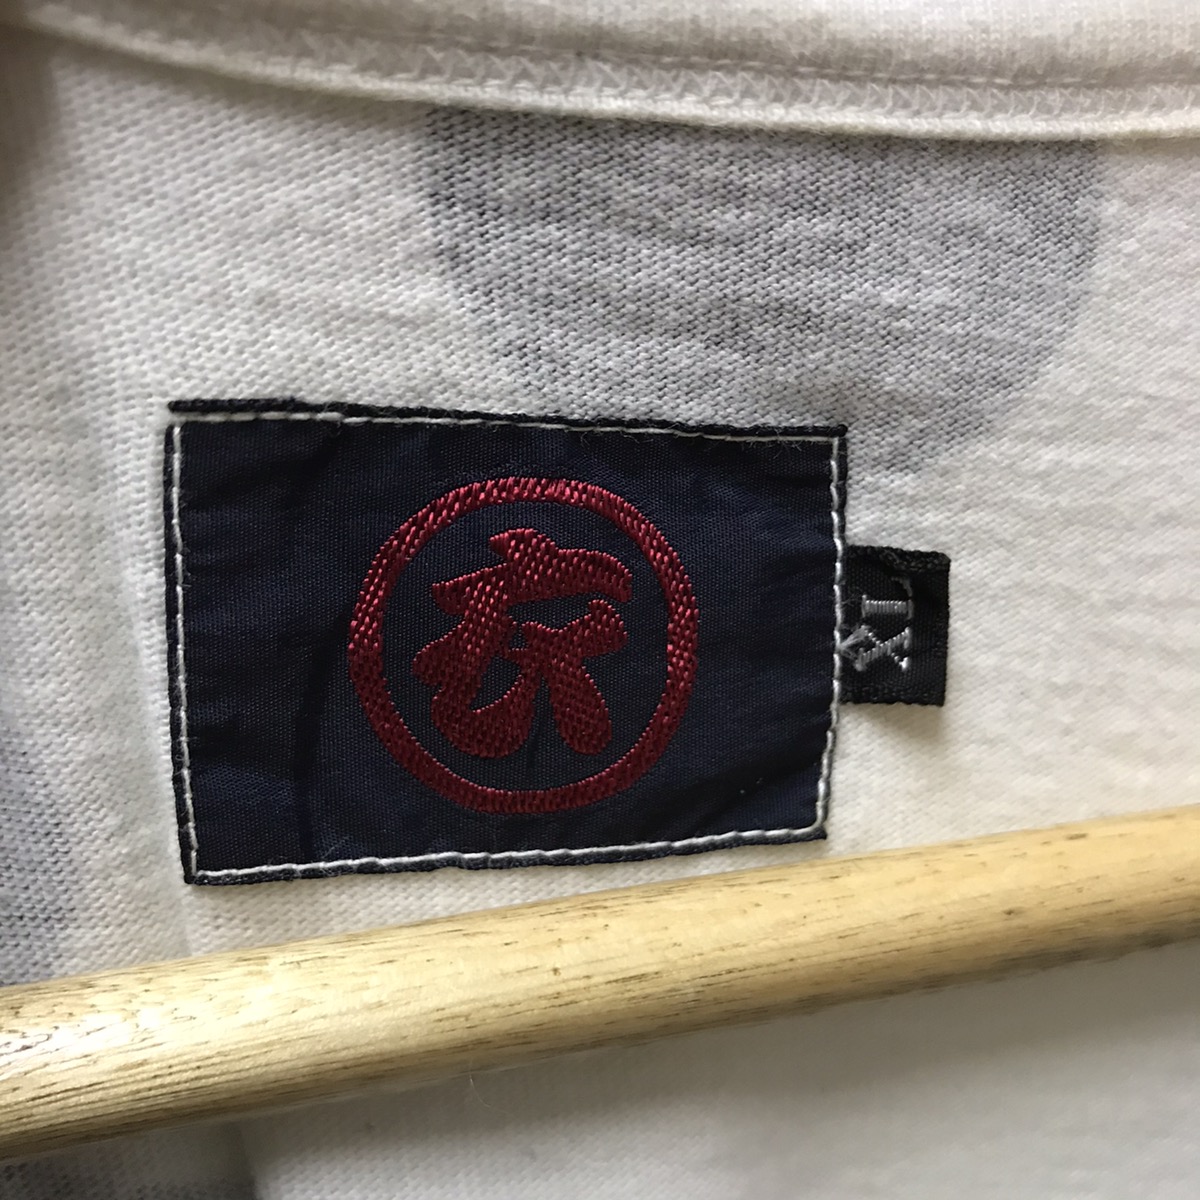 Coromool factory made kyoto samurai tshirt made in japan - 5